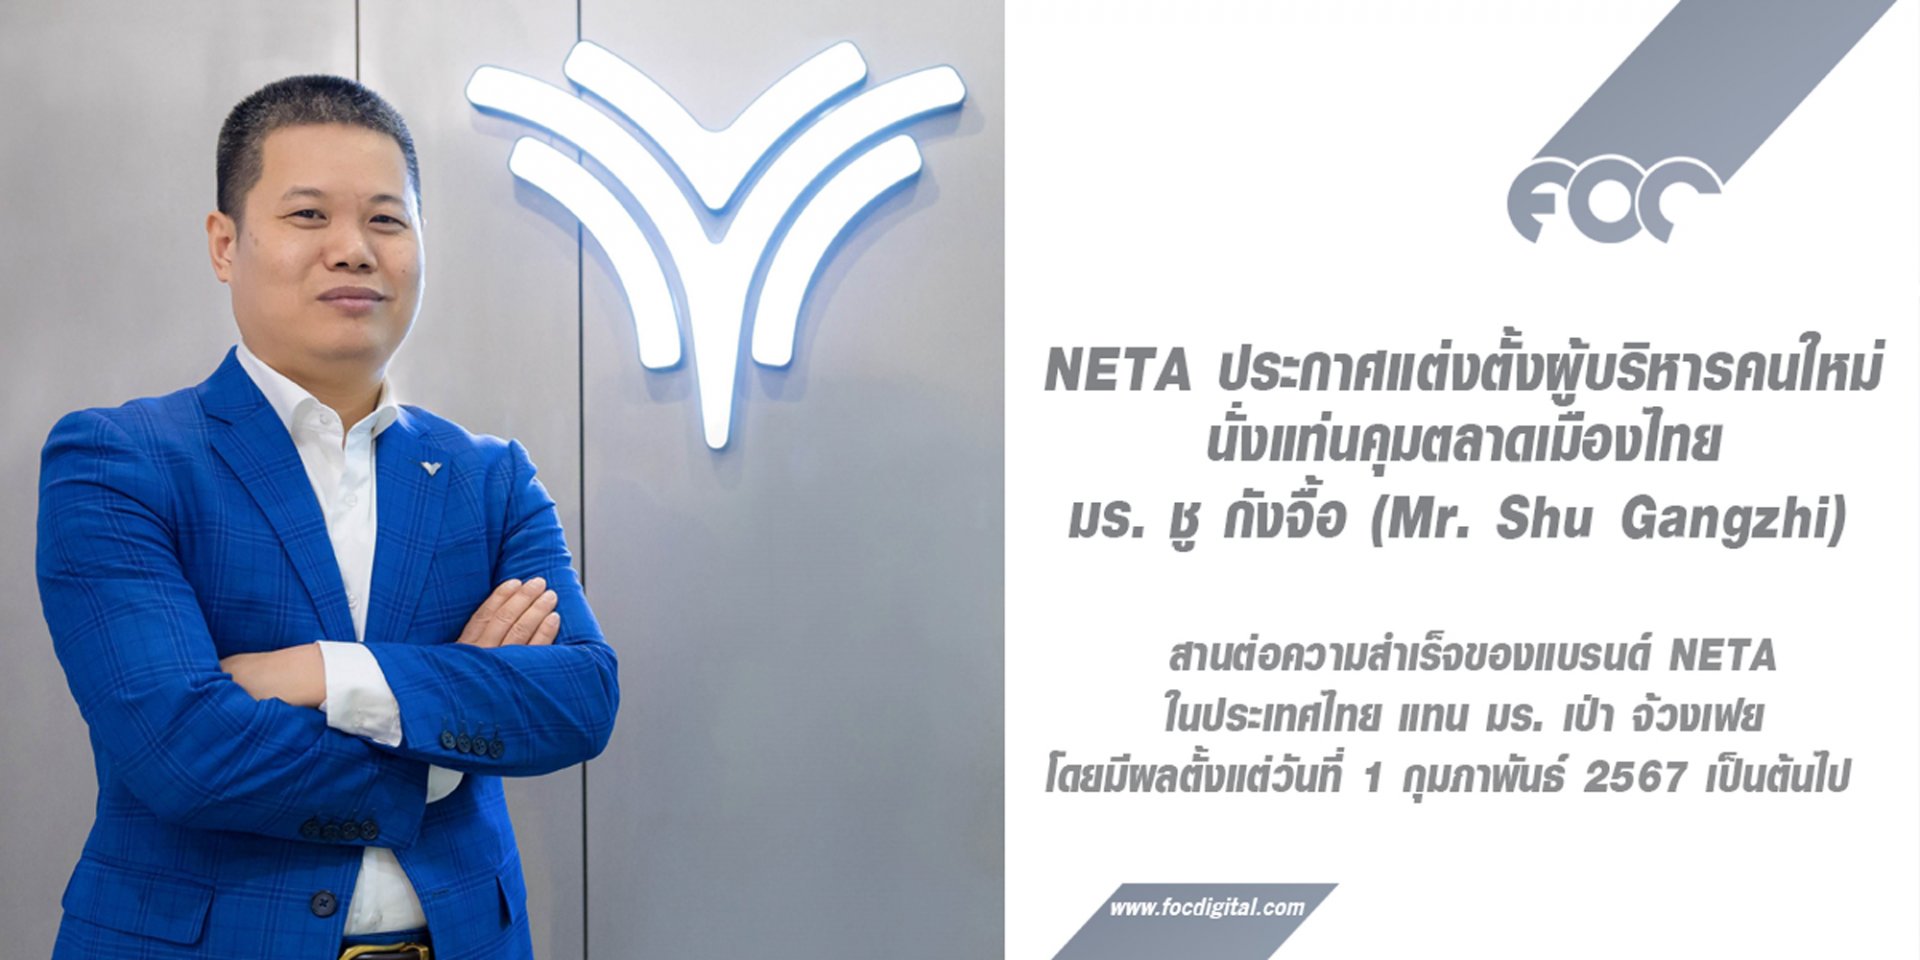 NETA ประเทศไทย แต่งตั้งผู้บริหารคนใหม่คุมตลาดเมืองไทย!